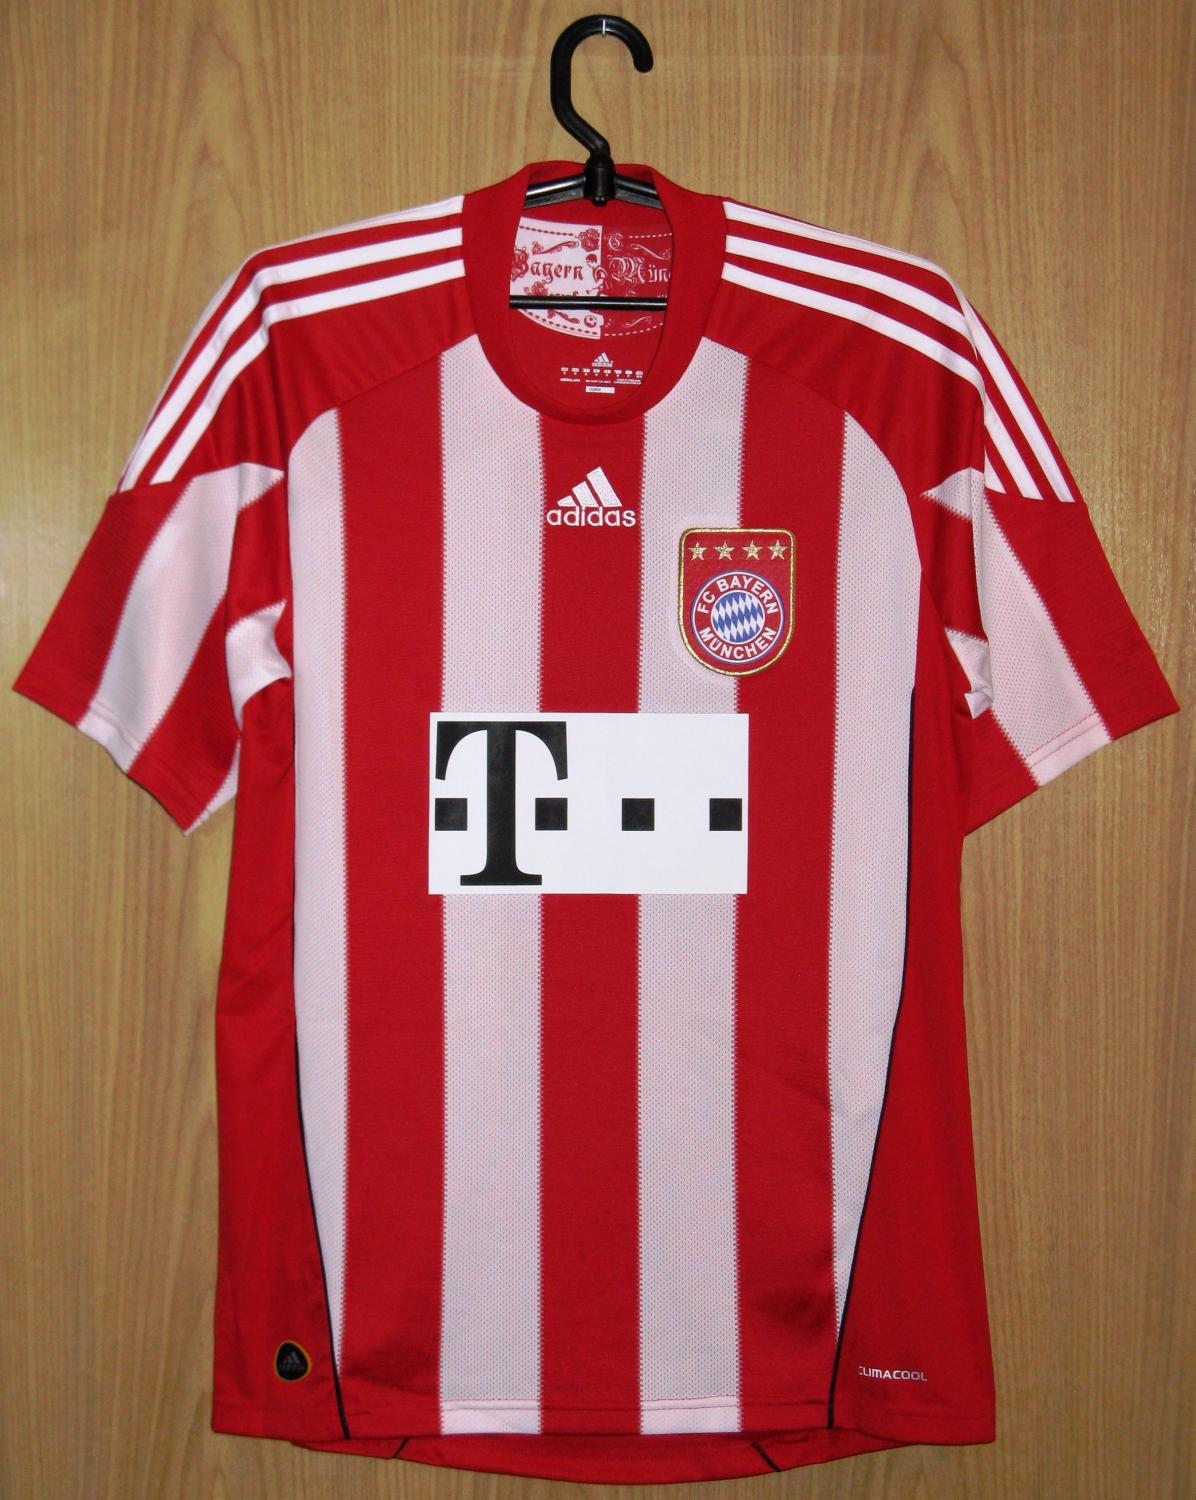 Bayern Munich Home football shirt 2010 - 2011. Added on 2016-06-19, 15:47